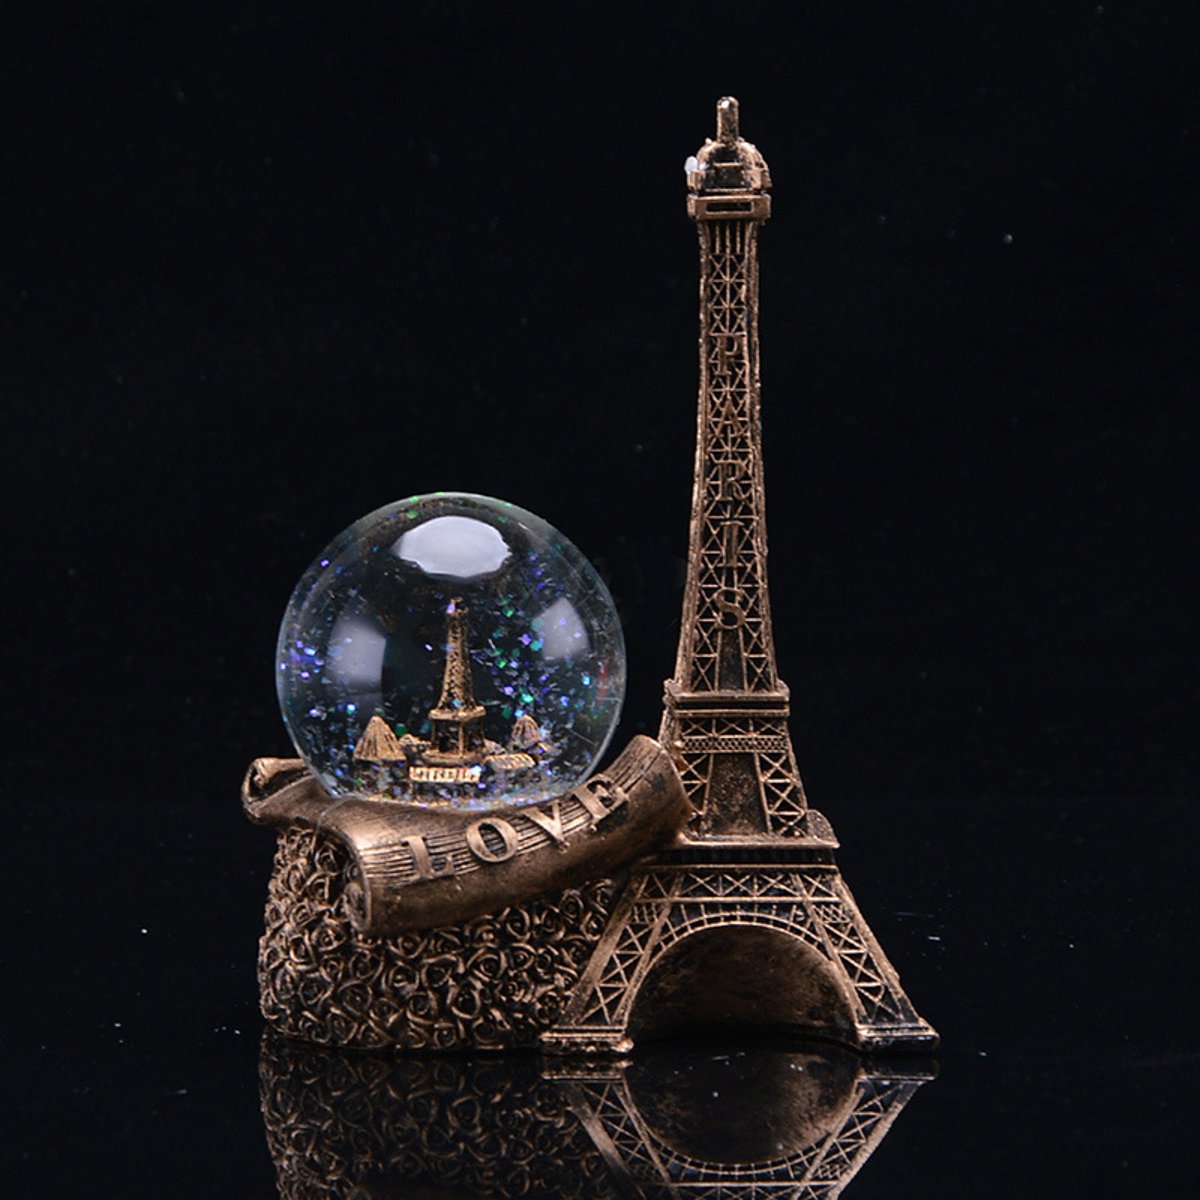 Vintage Crystal Ball Paris Eiffel Tower Model Statue Home Desk